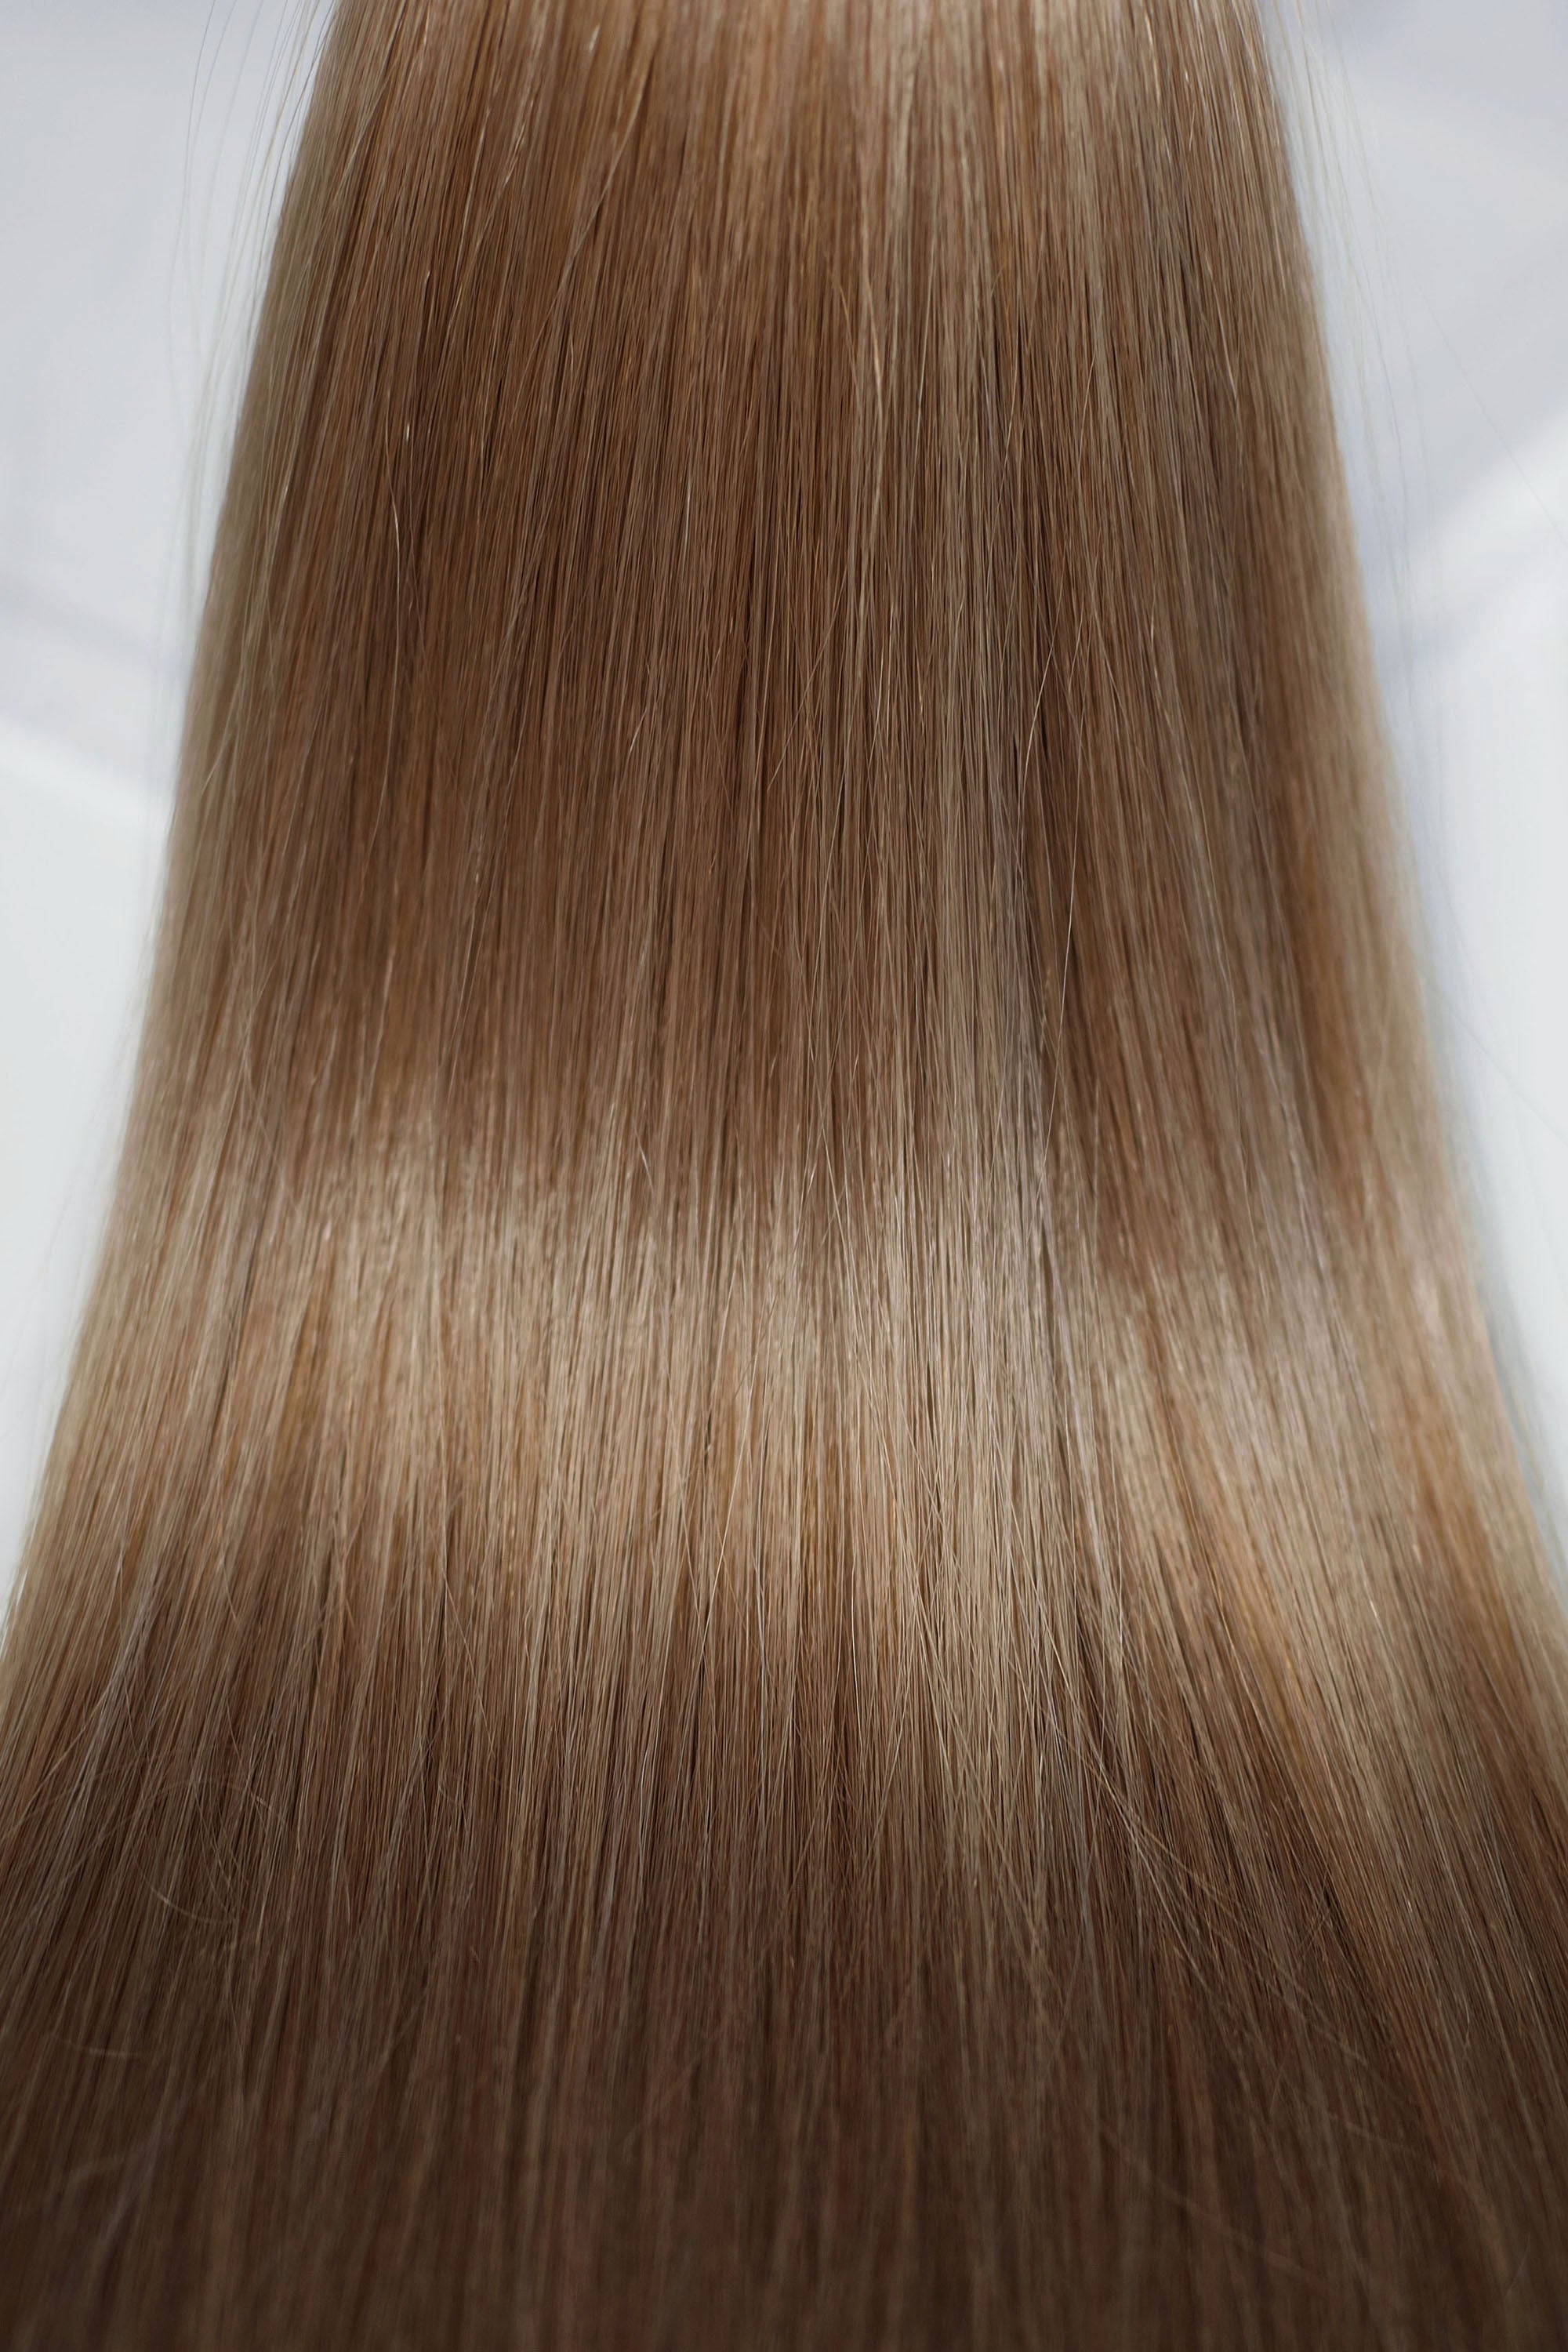 Behair professional Keratin Tip "Premium" 22" (55cm) Natural Straight Light Ash Brown #10 - 25g (Standart - 0.7g each pcs) hair extensions